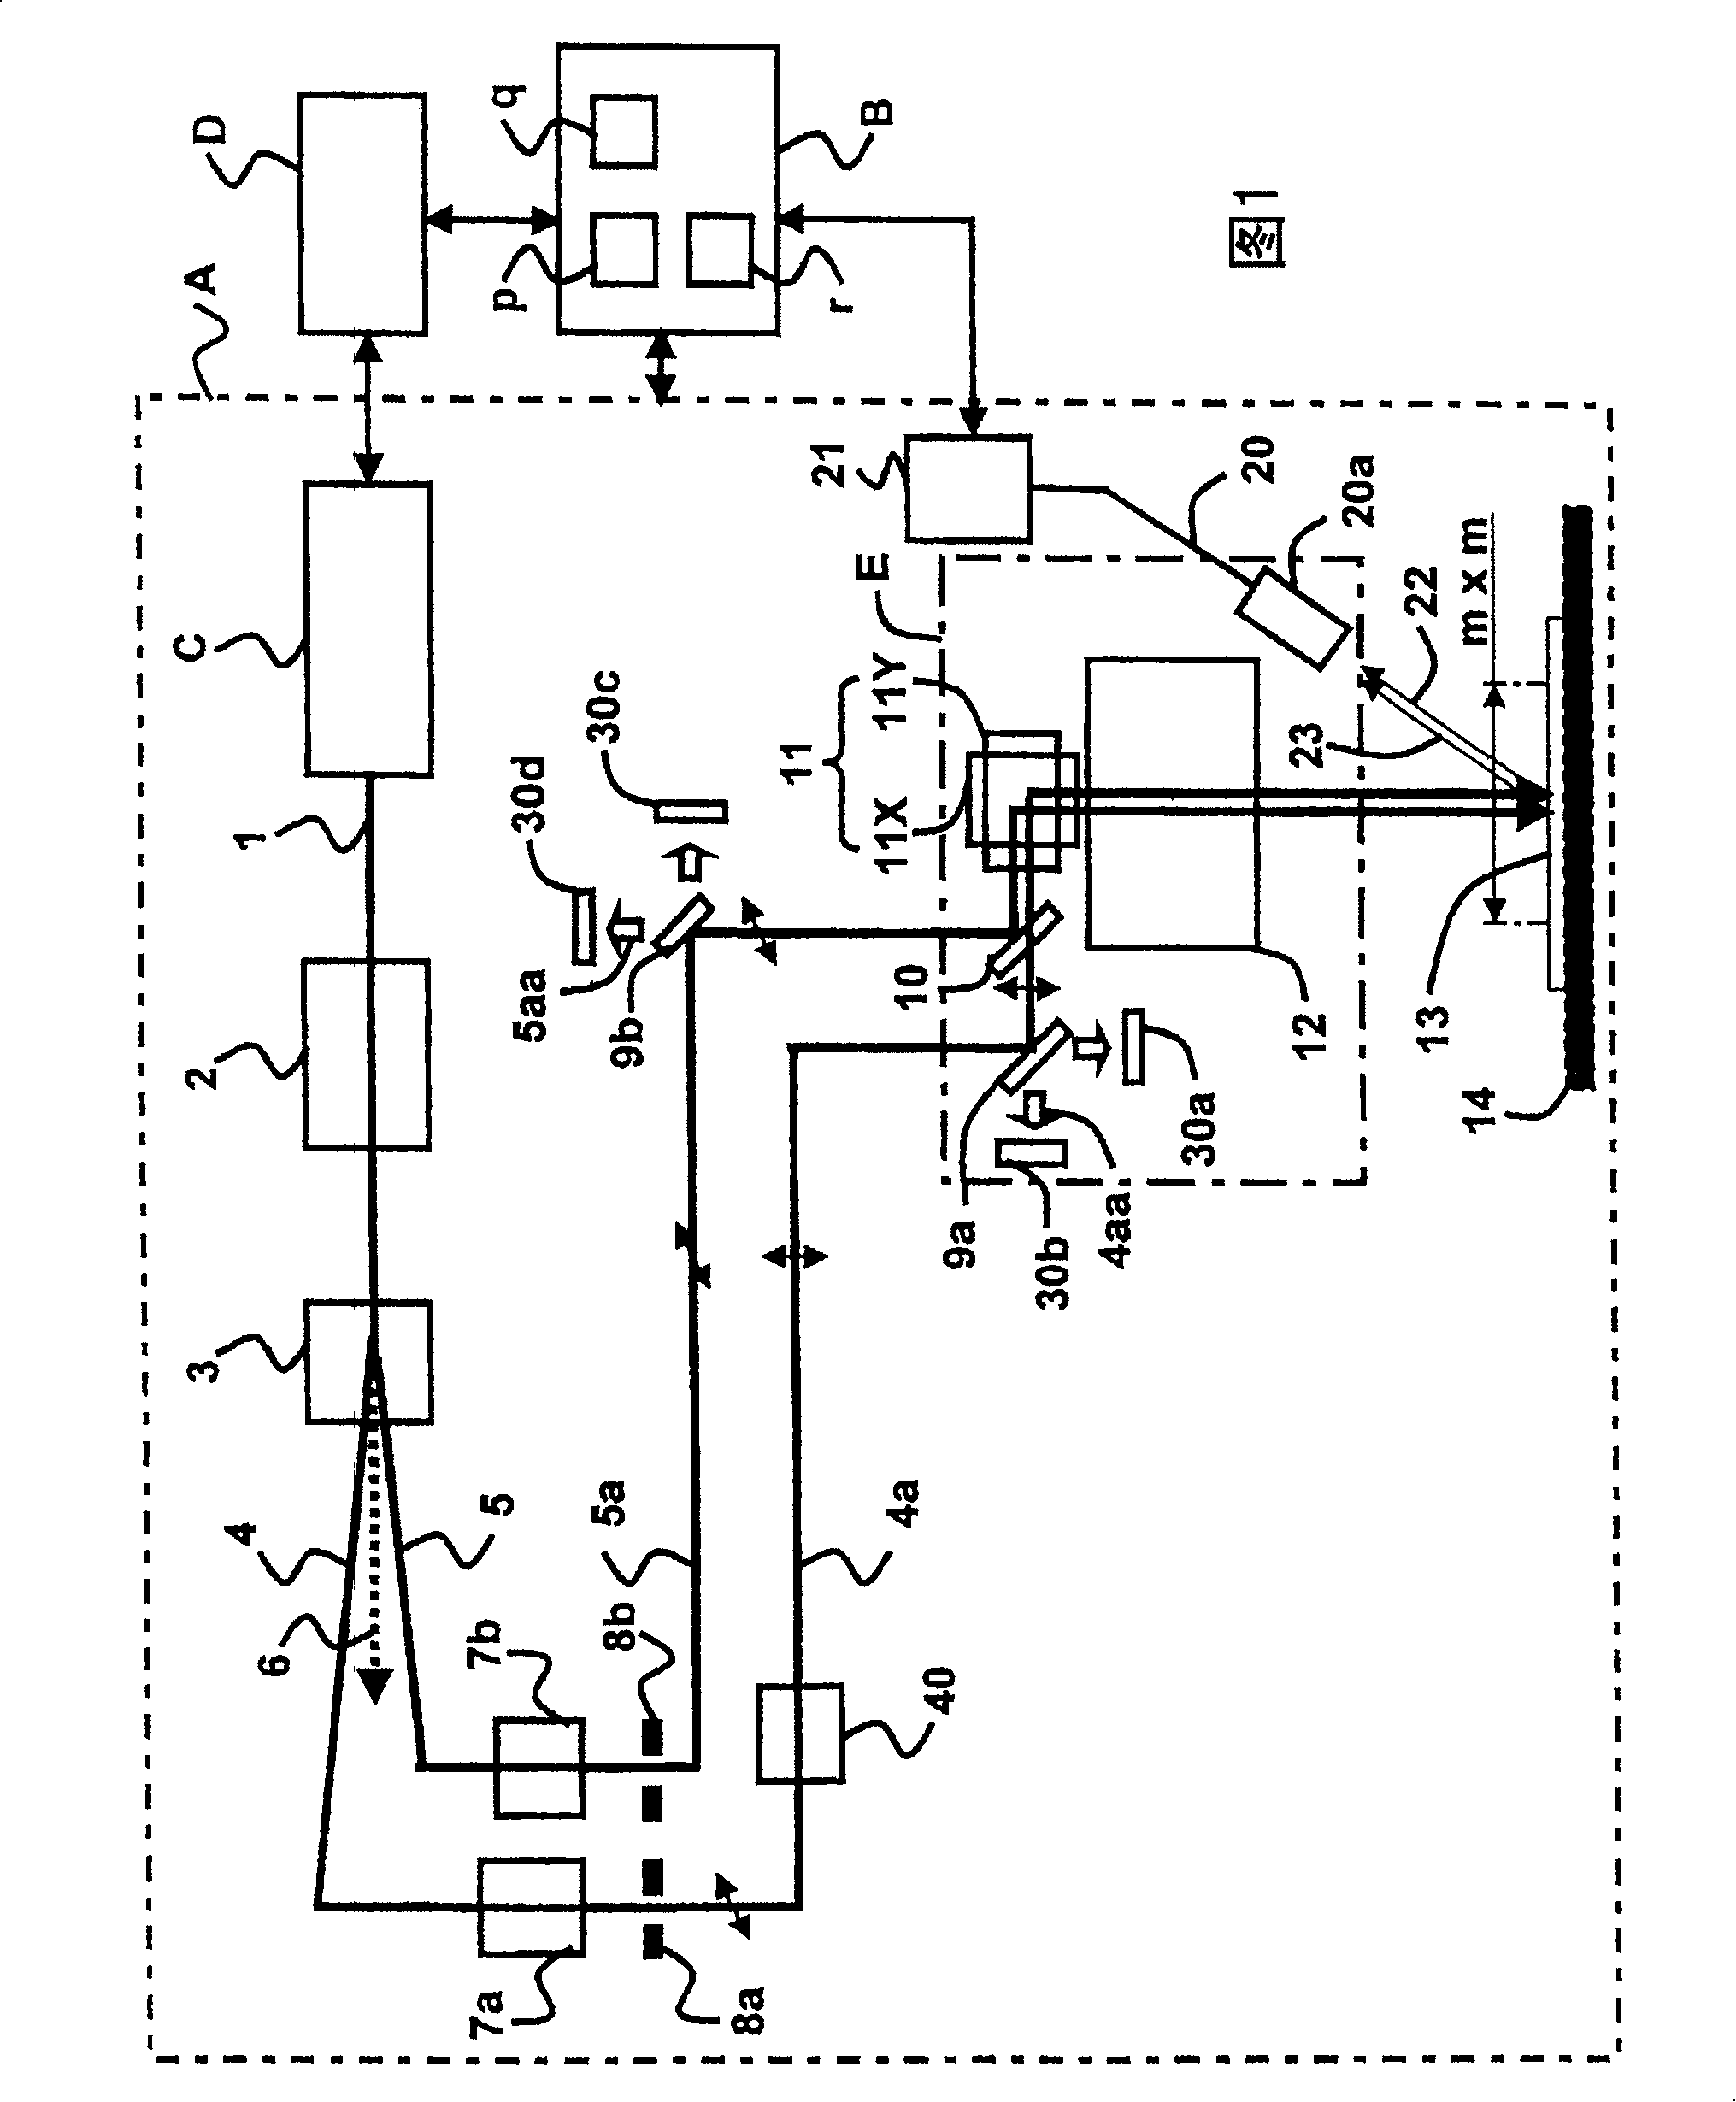 Method and apparatus for perforating printed circuit board